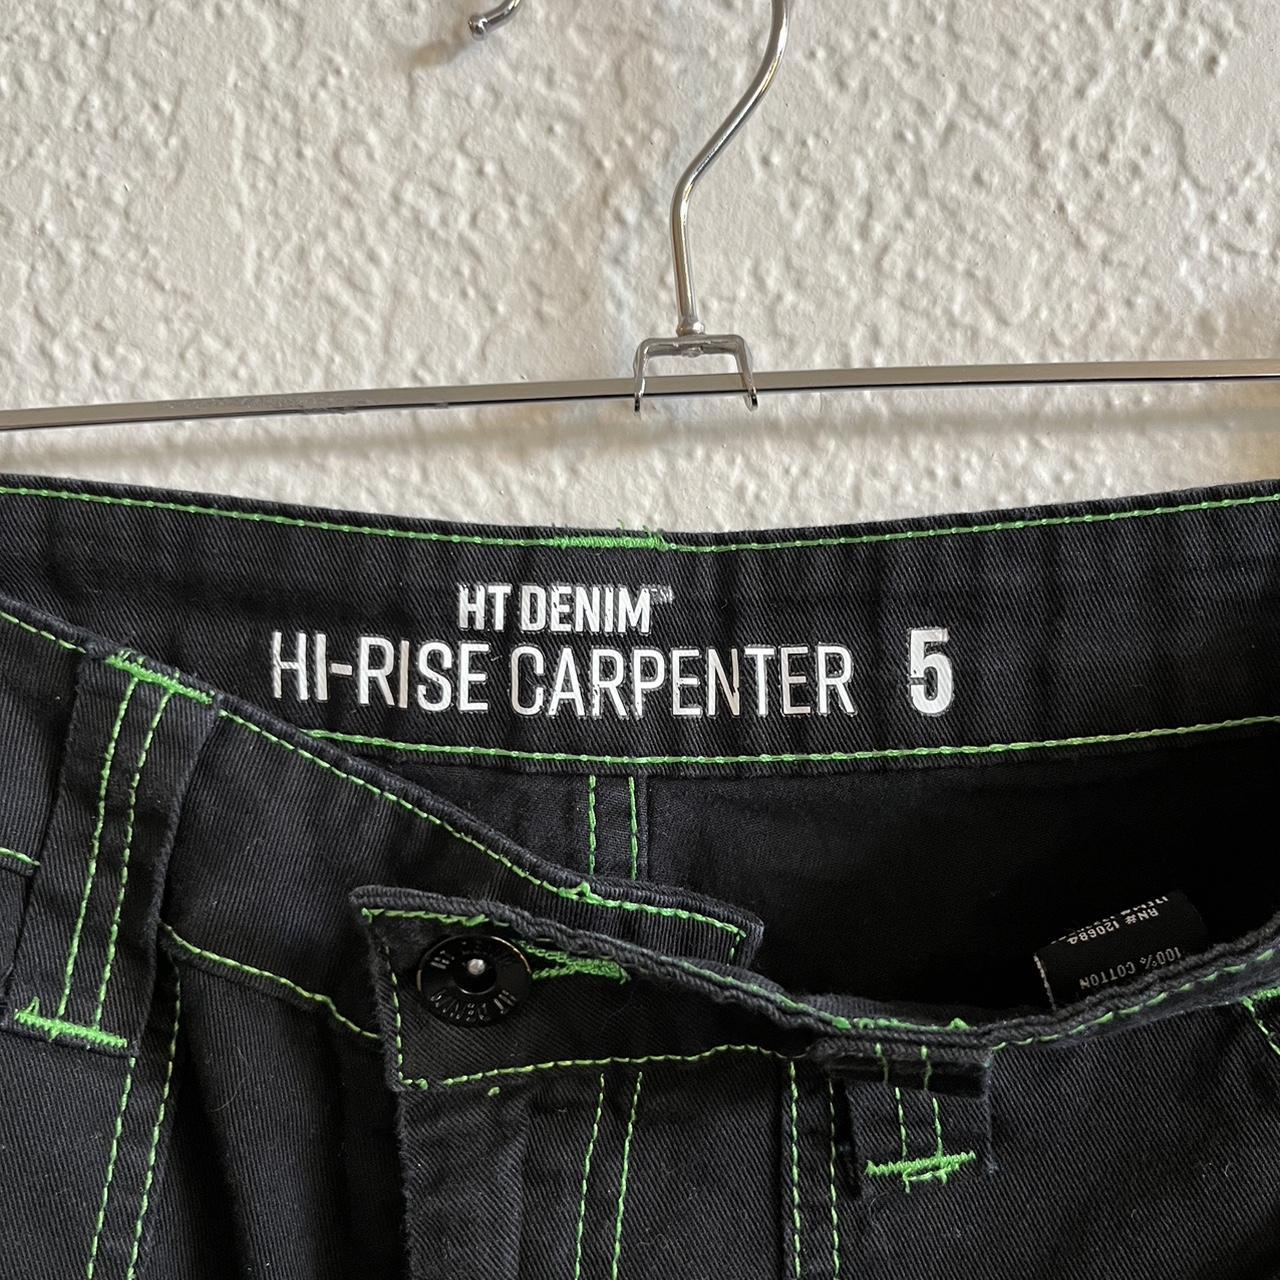 Hot topic Tripp pants size 28 - Depop